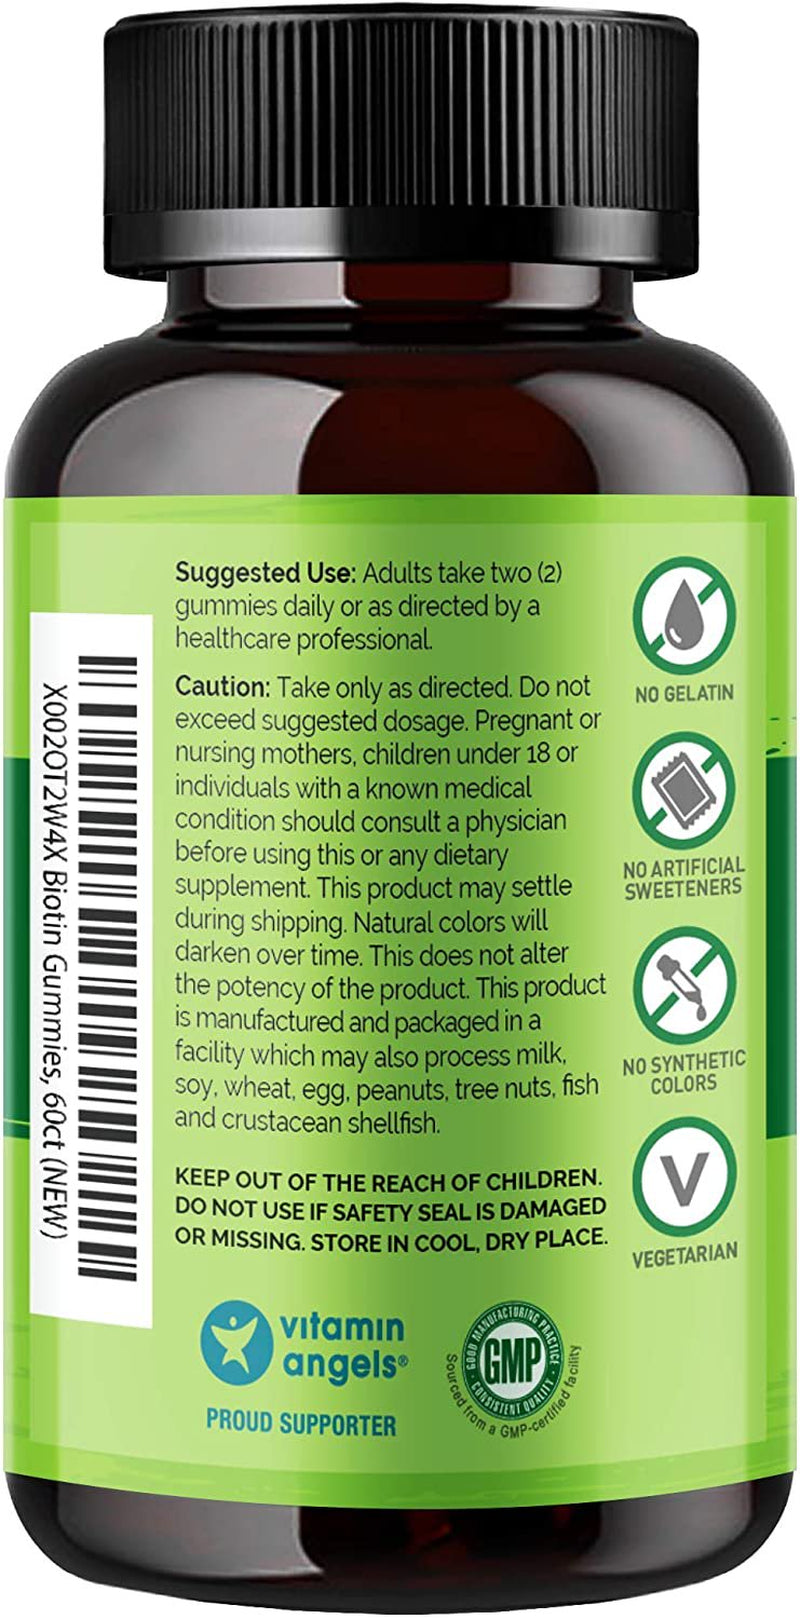 NATURELO Biotin Gummies - Supports Healthy Hair, Skin & Nails - High Potency 2500 Mcg - Non GMO, Gluten Free - 60 Gummies